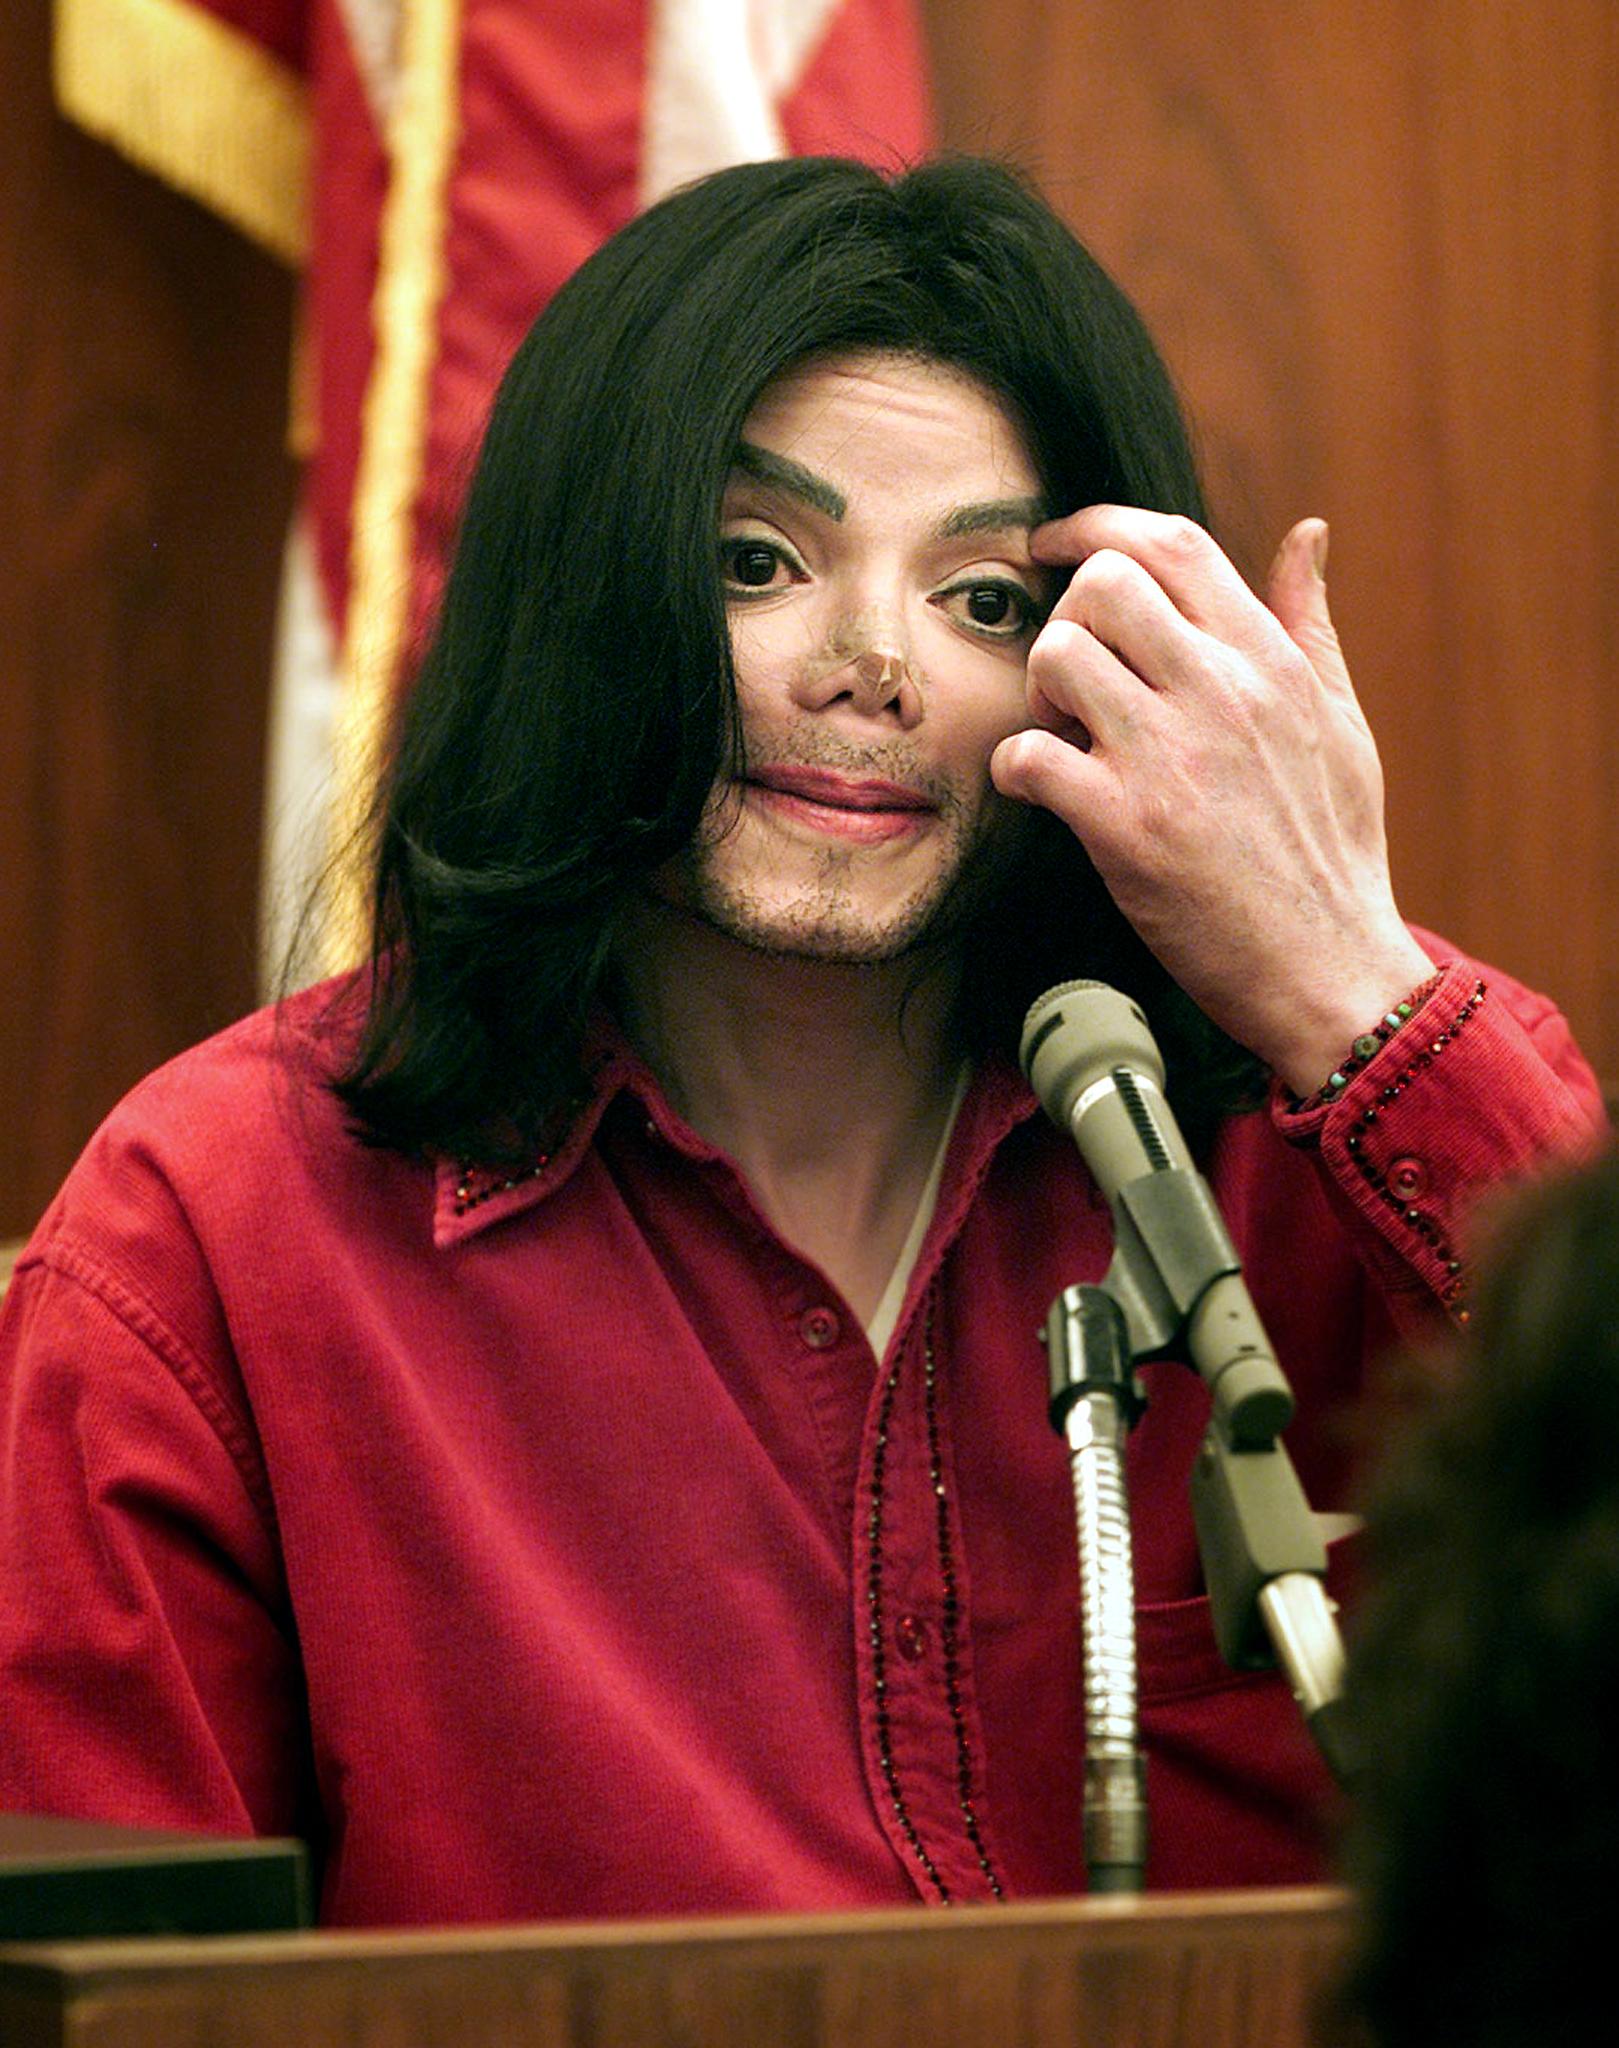 Michael Jackson at the Santa Barbara County Courthouse on November 13, 2002 in Santa Maria, California | Source: Getty Images